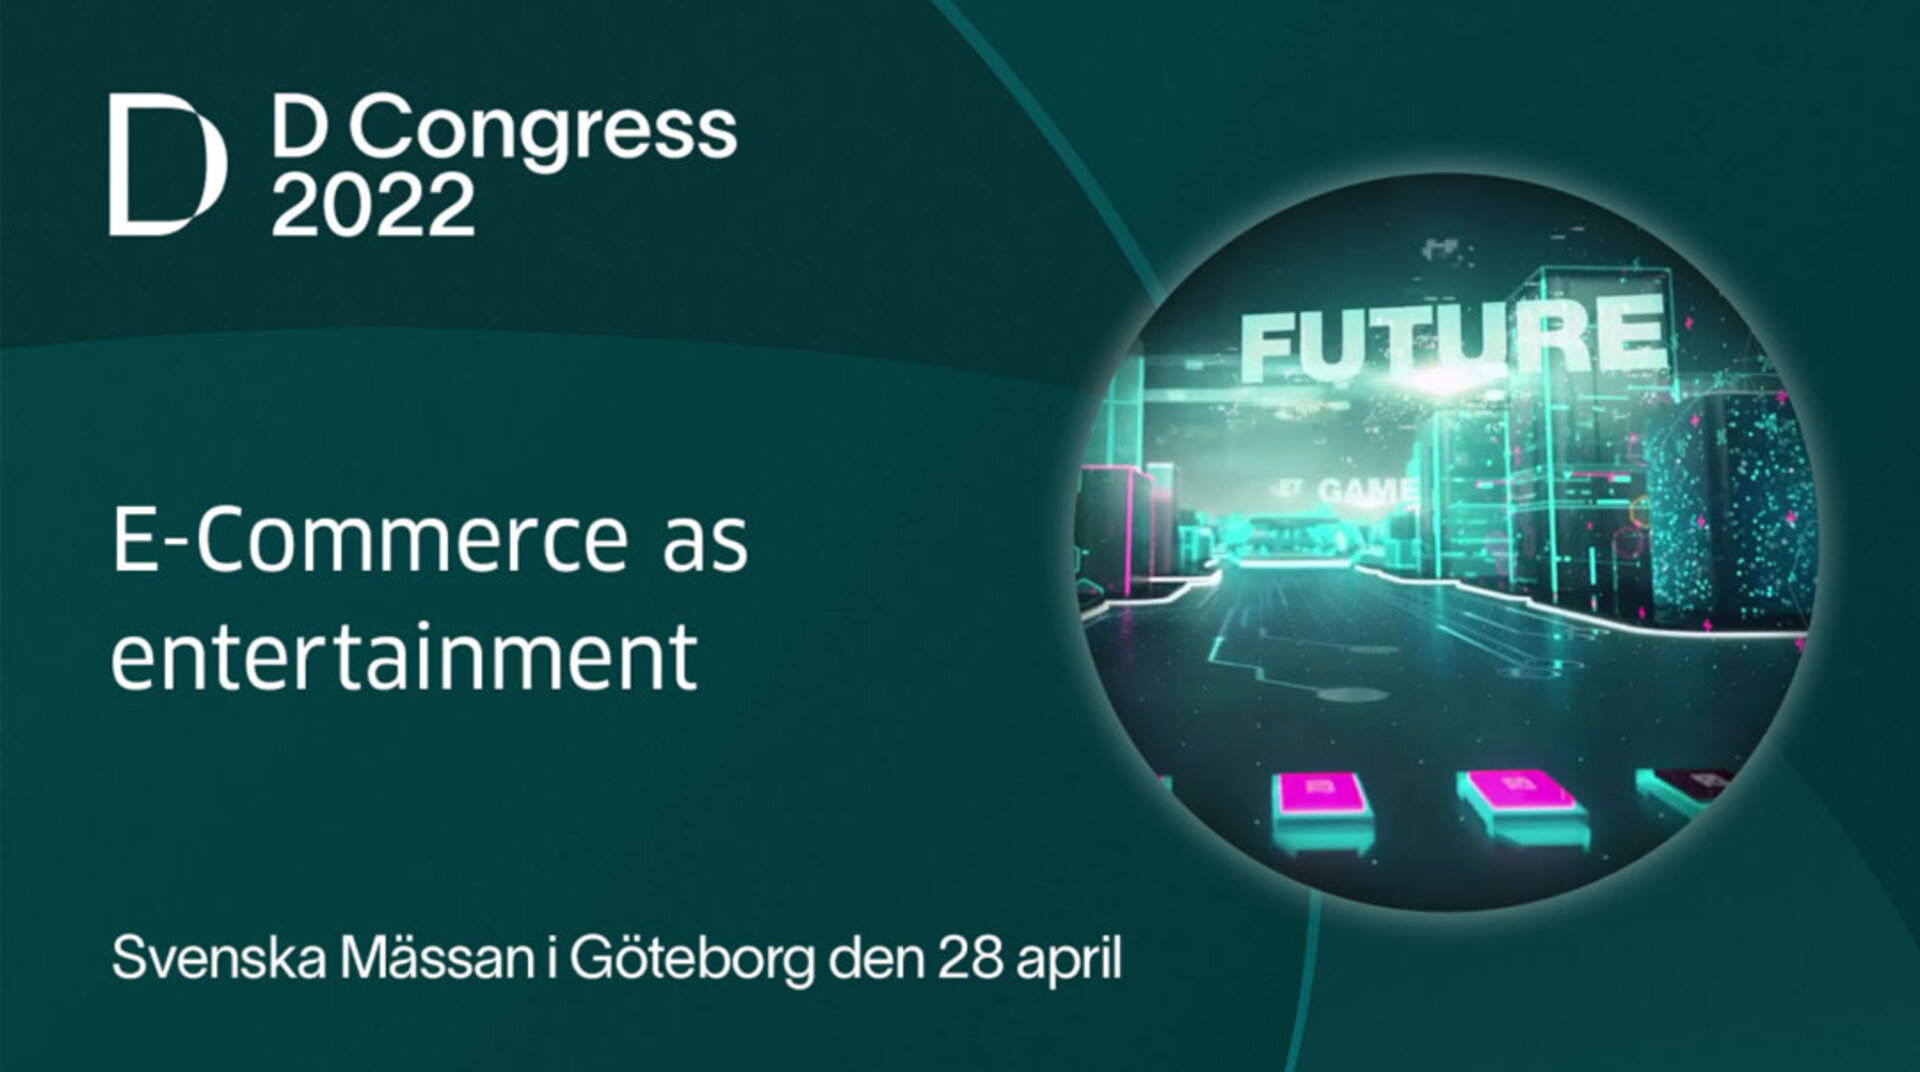 D-Congress Gothenburg 2022